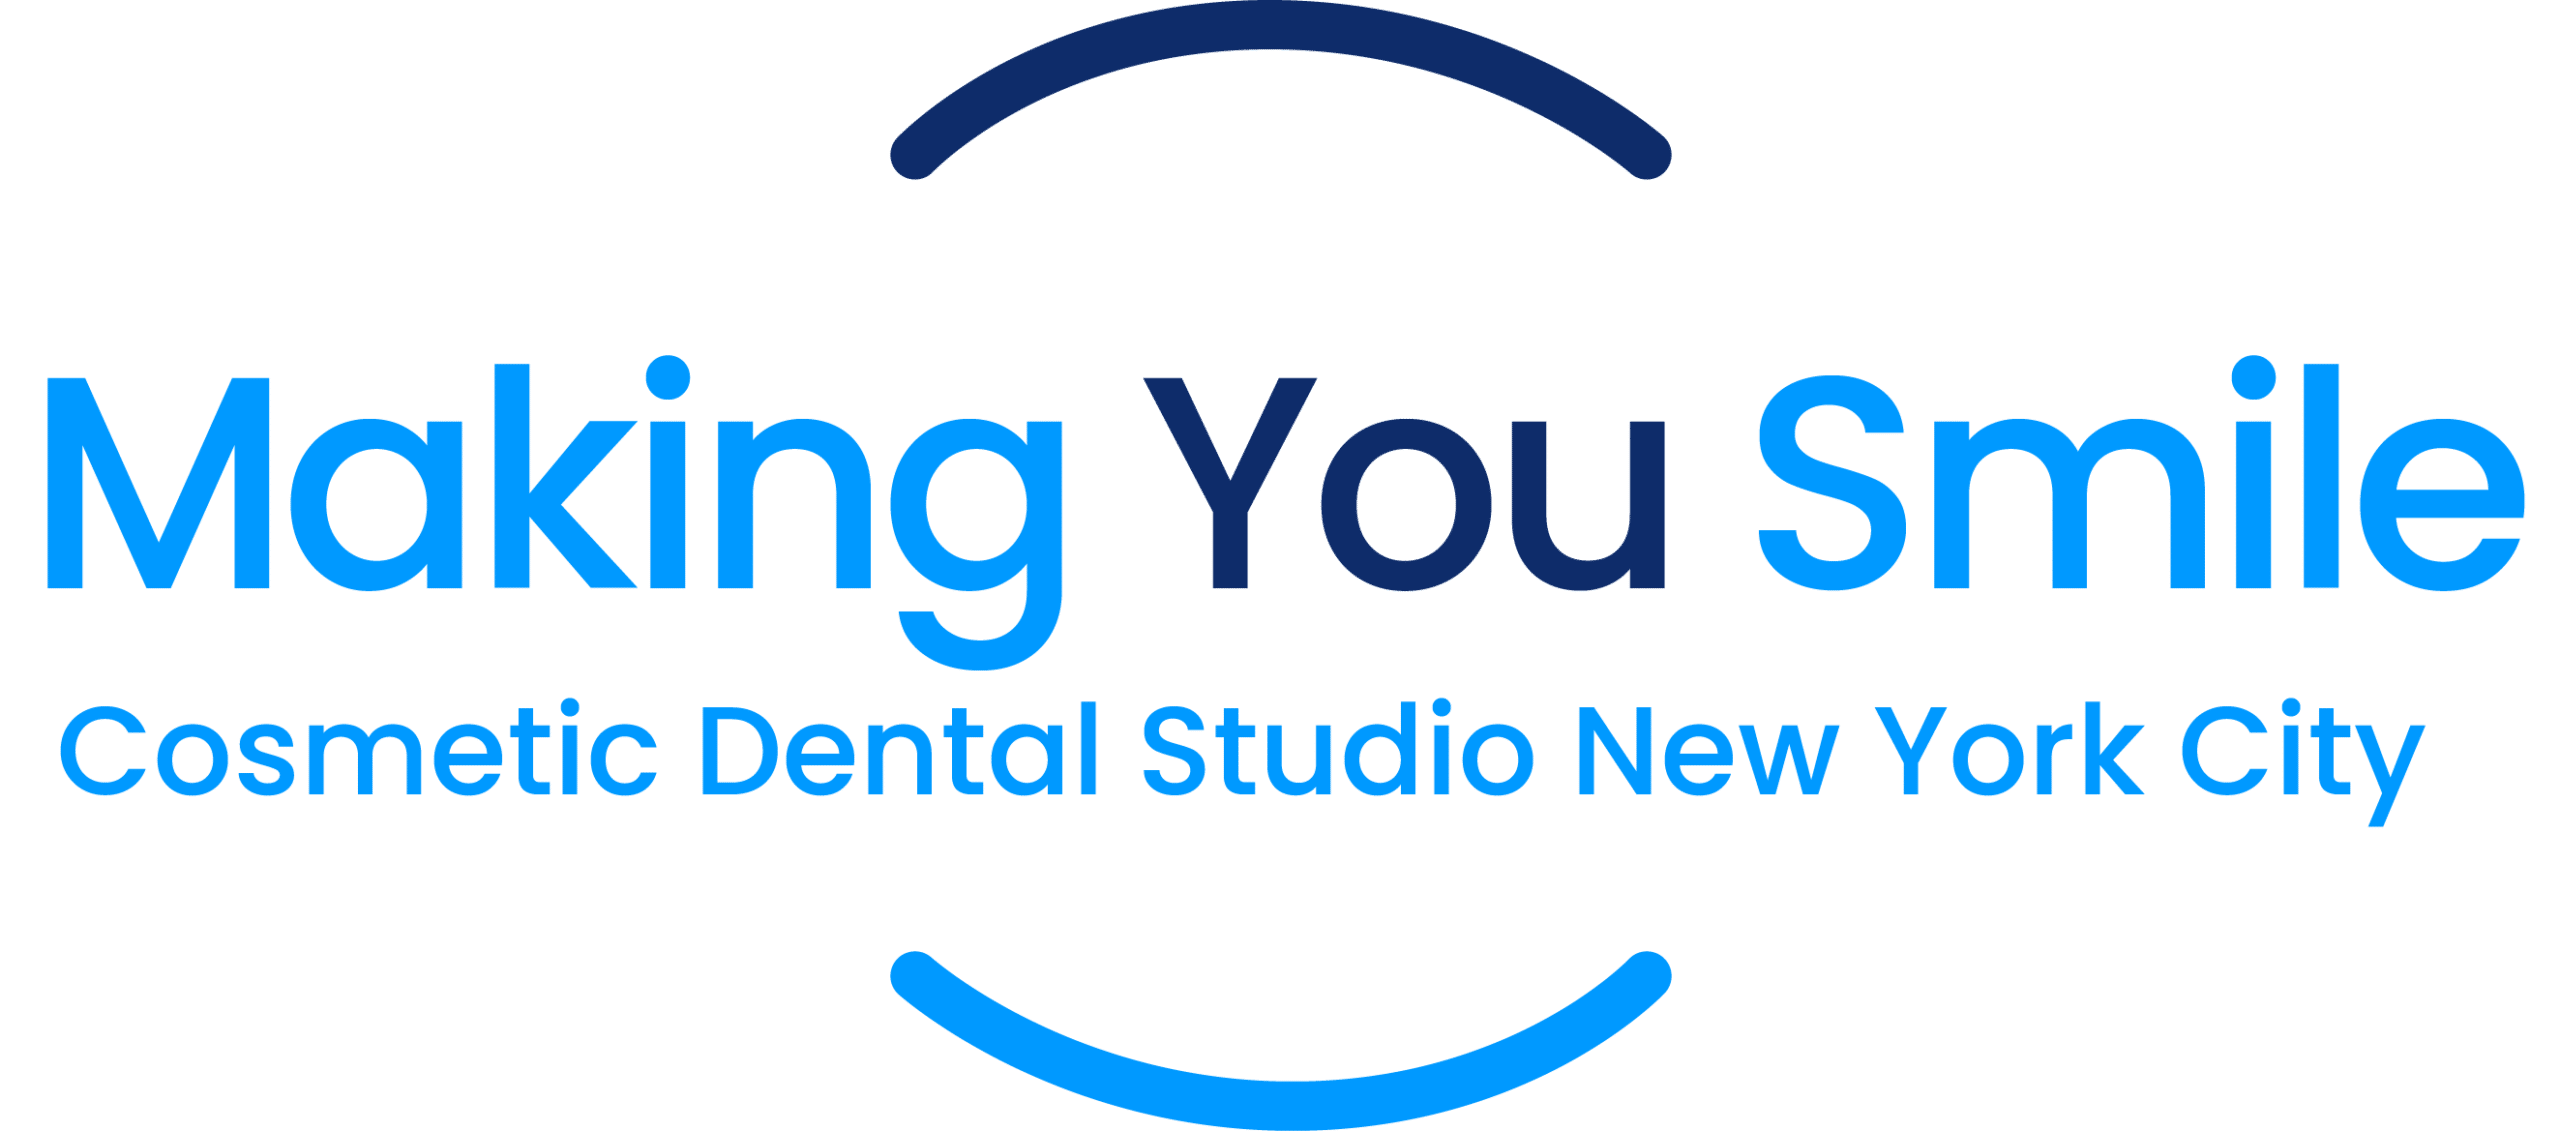 nyc teeth whitening service